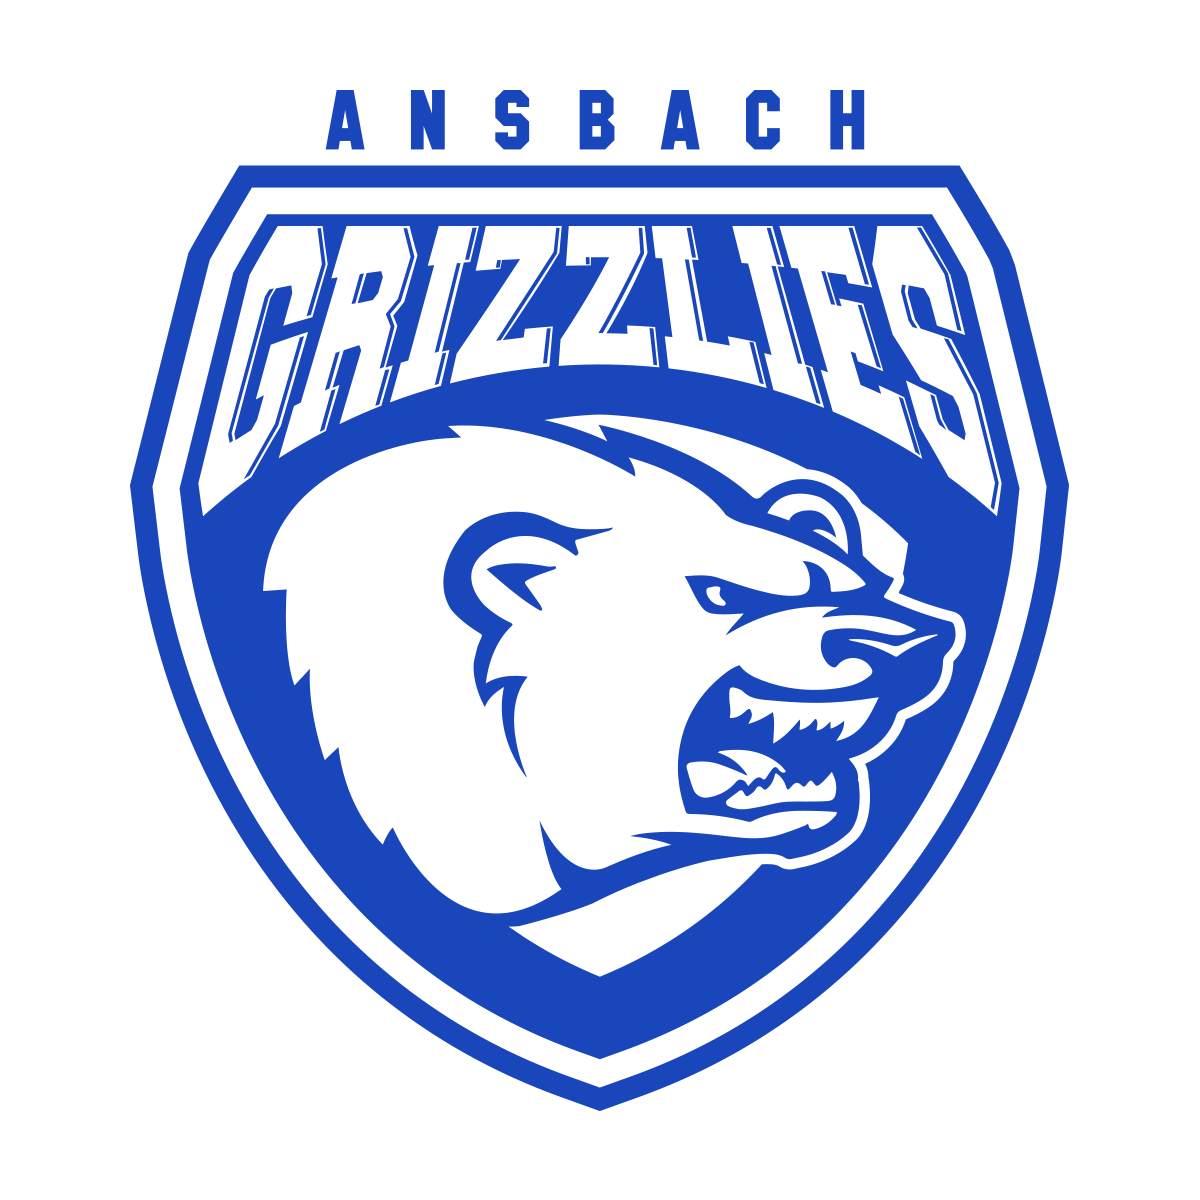 Ansbach Grizzlies